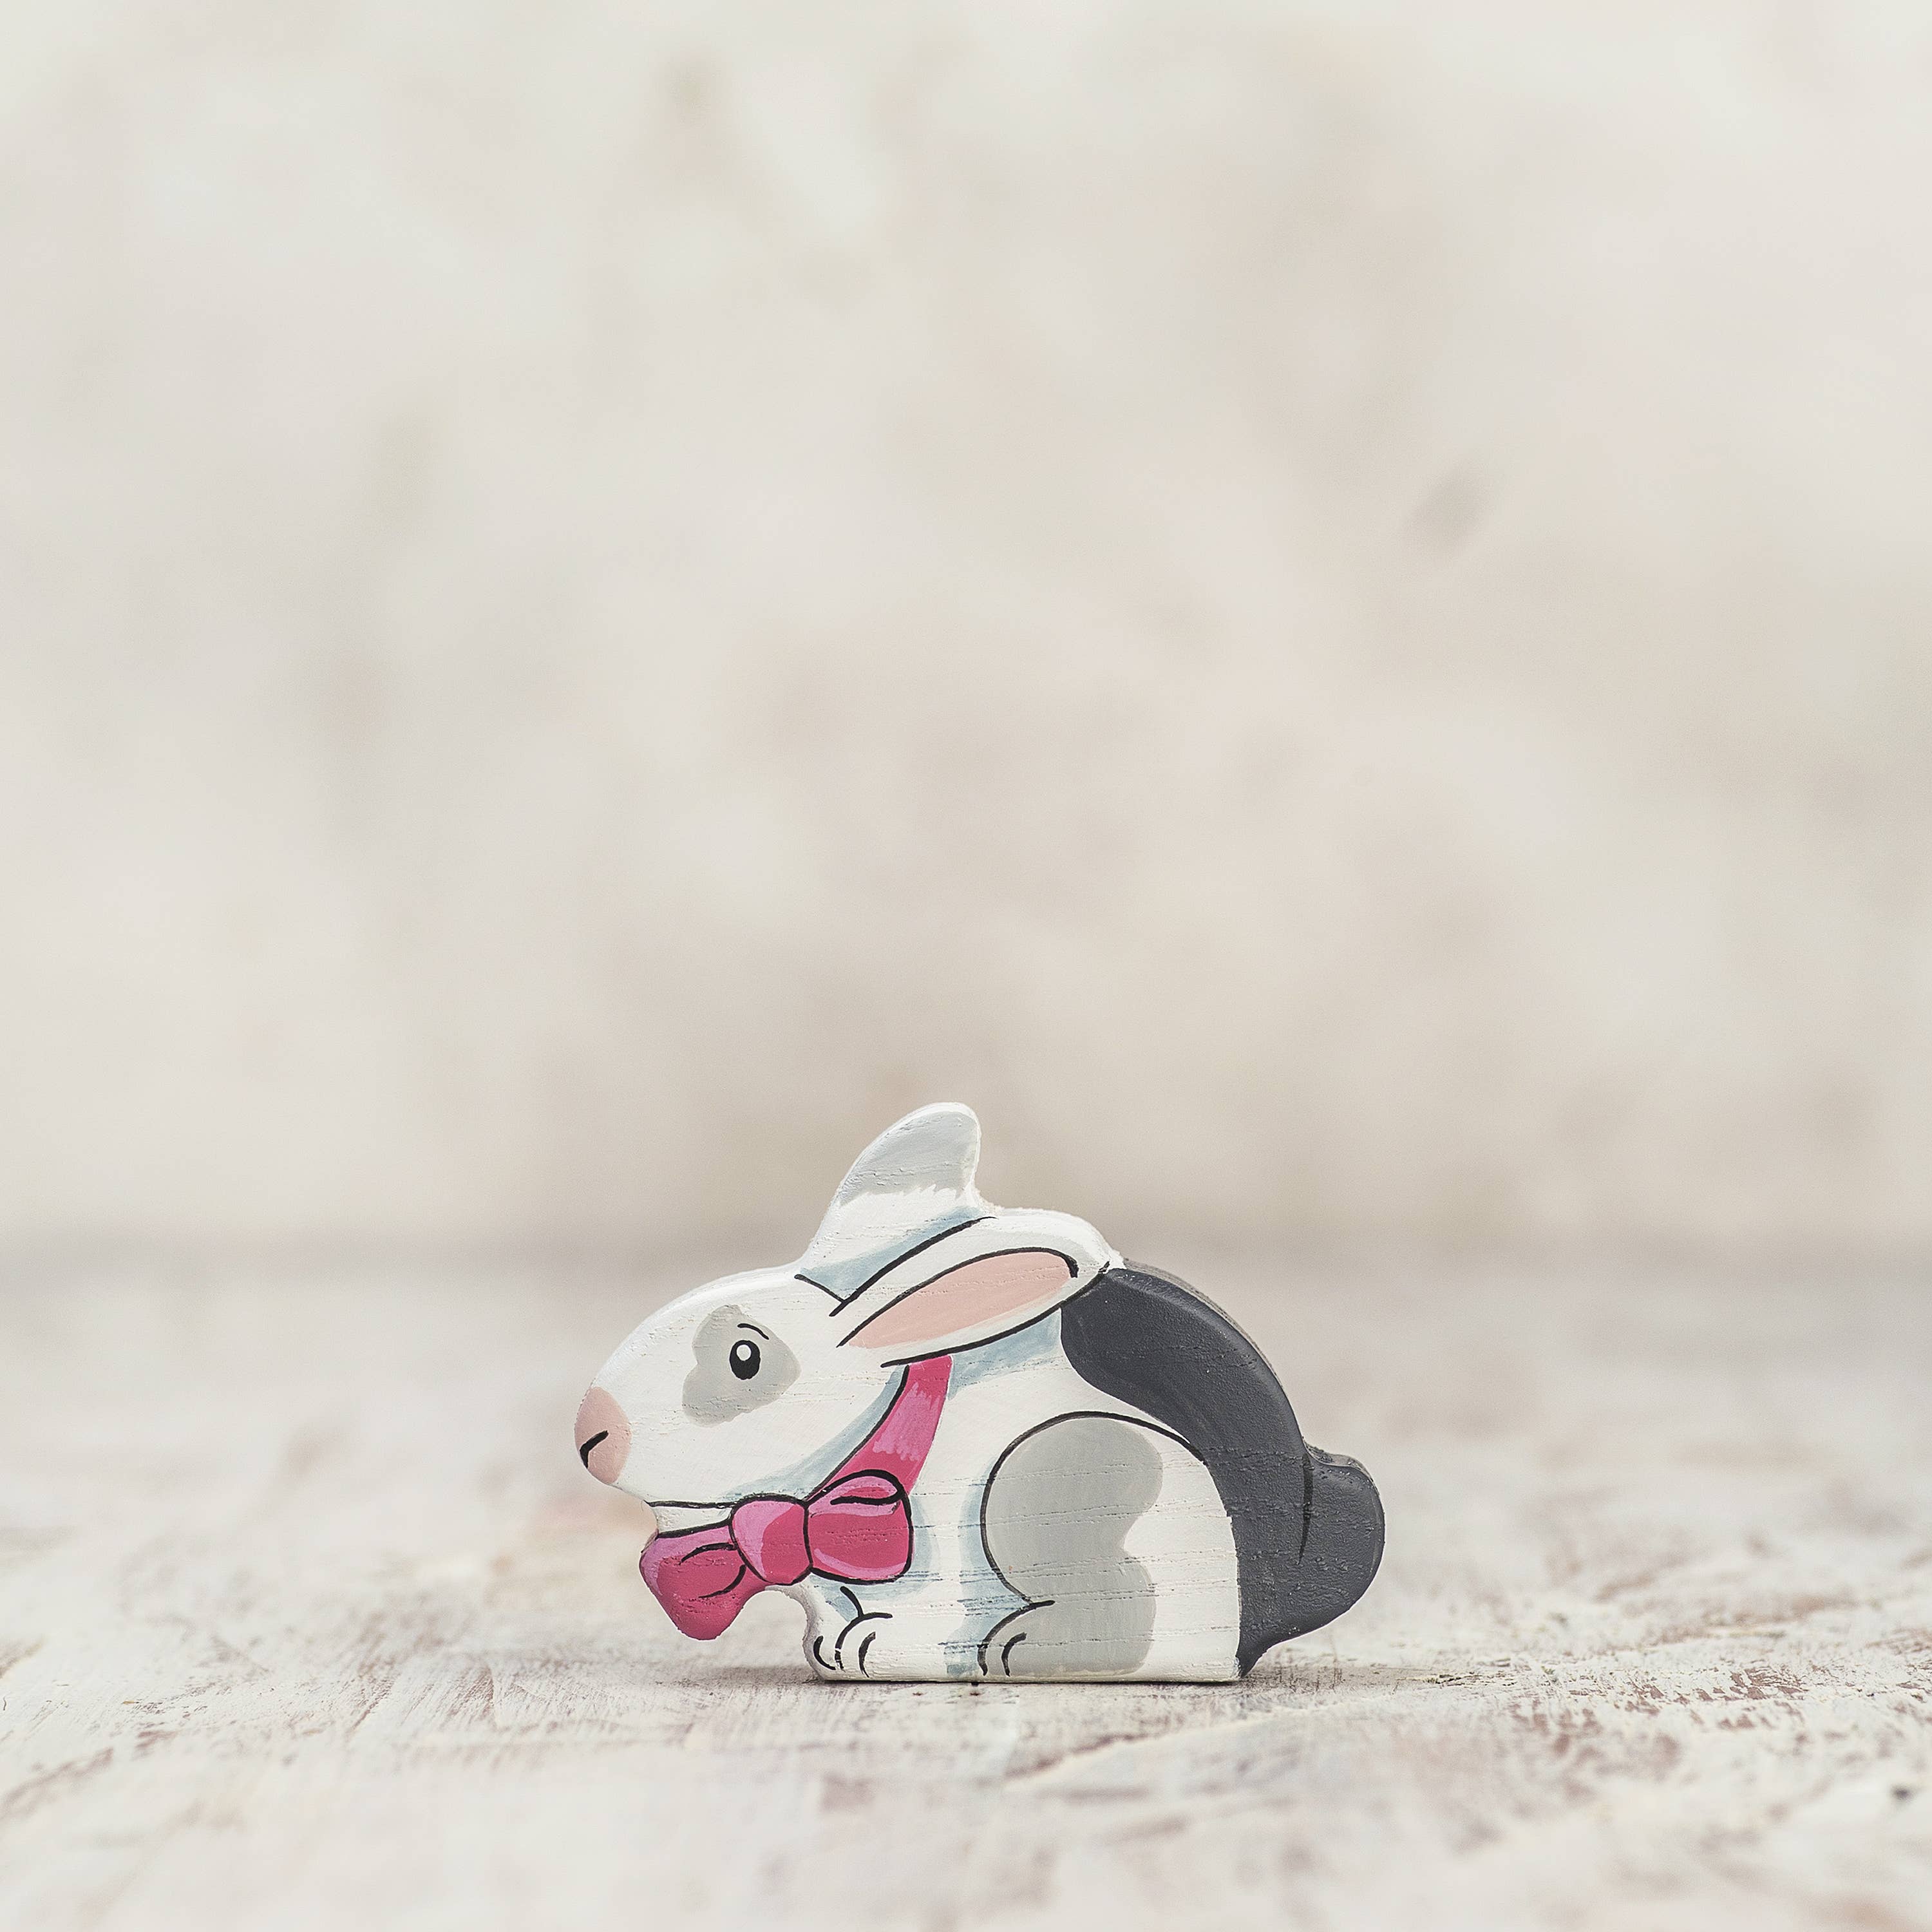 White Easter Bunny